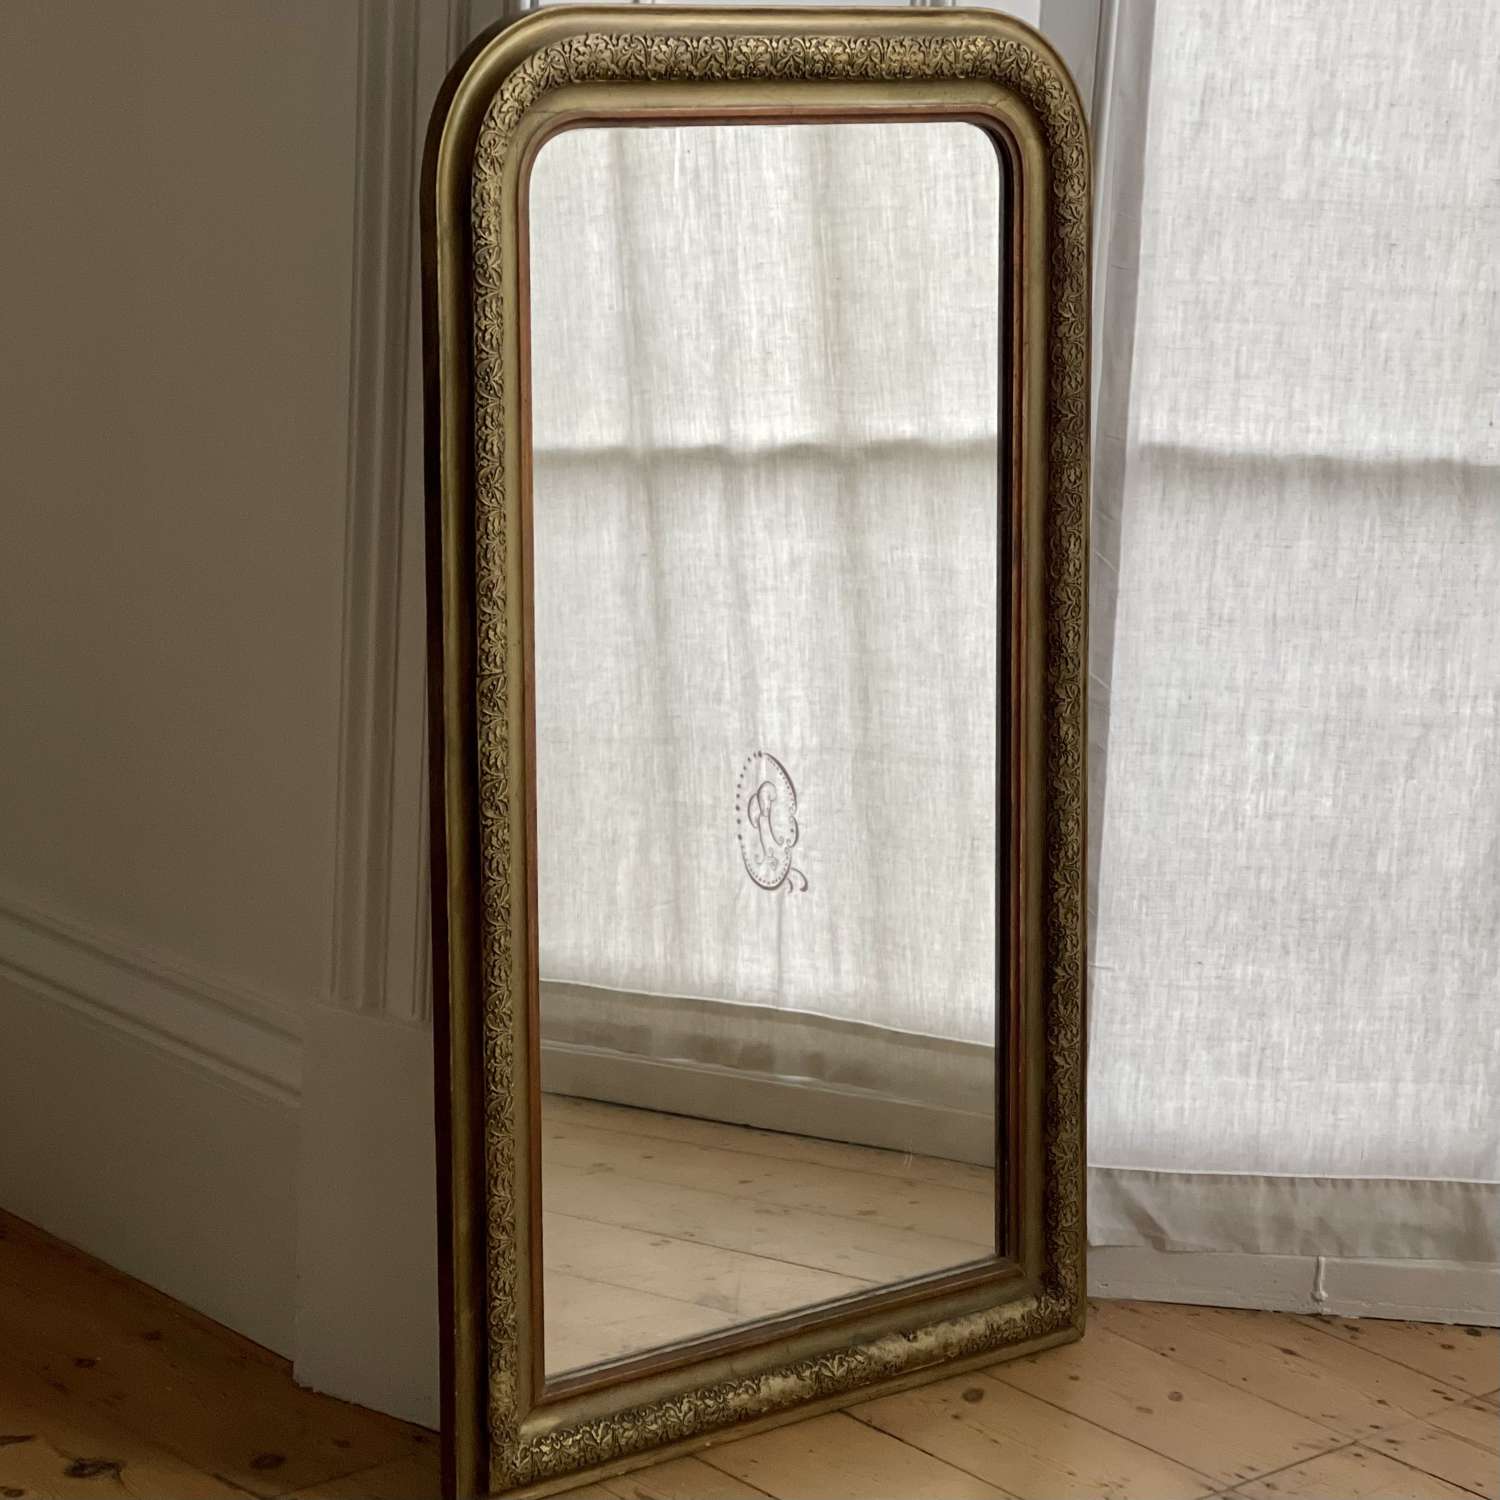 Antique French mirror - c 1860